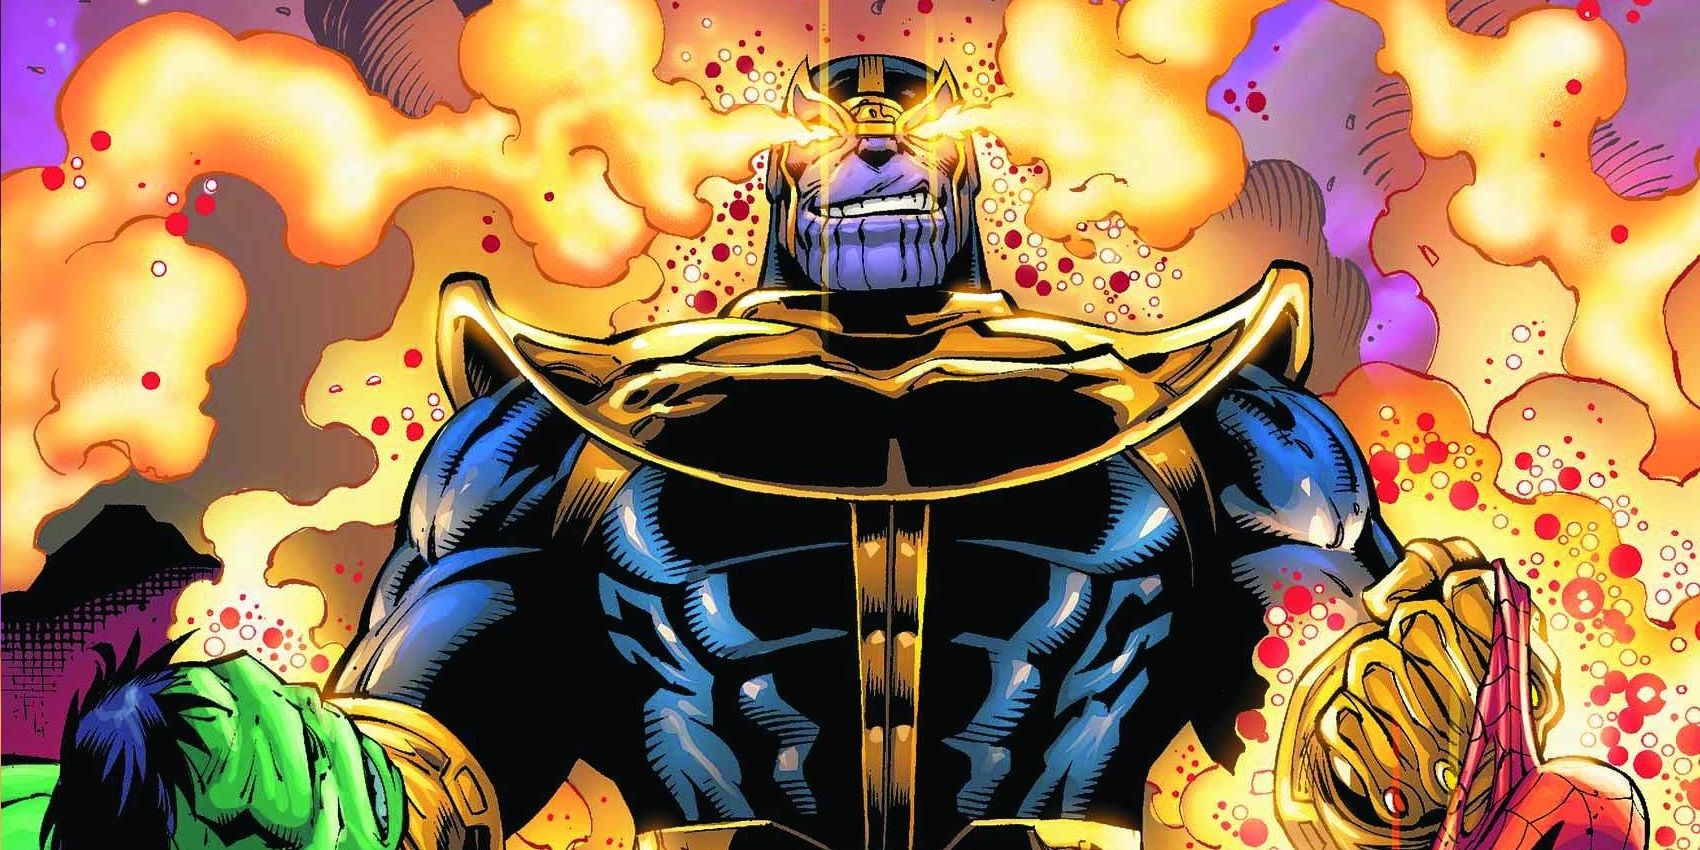 Thanos weilding Cosmic Power